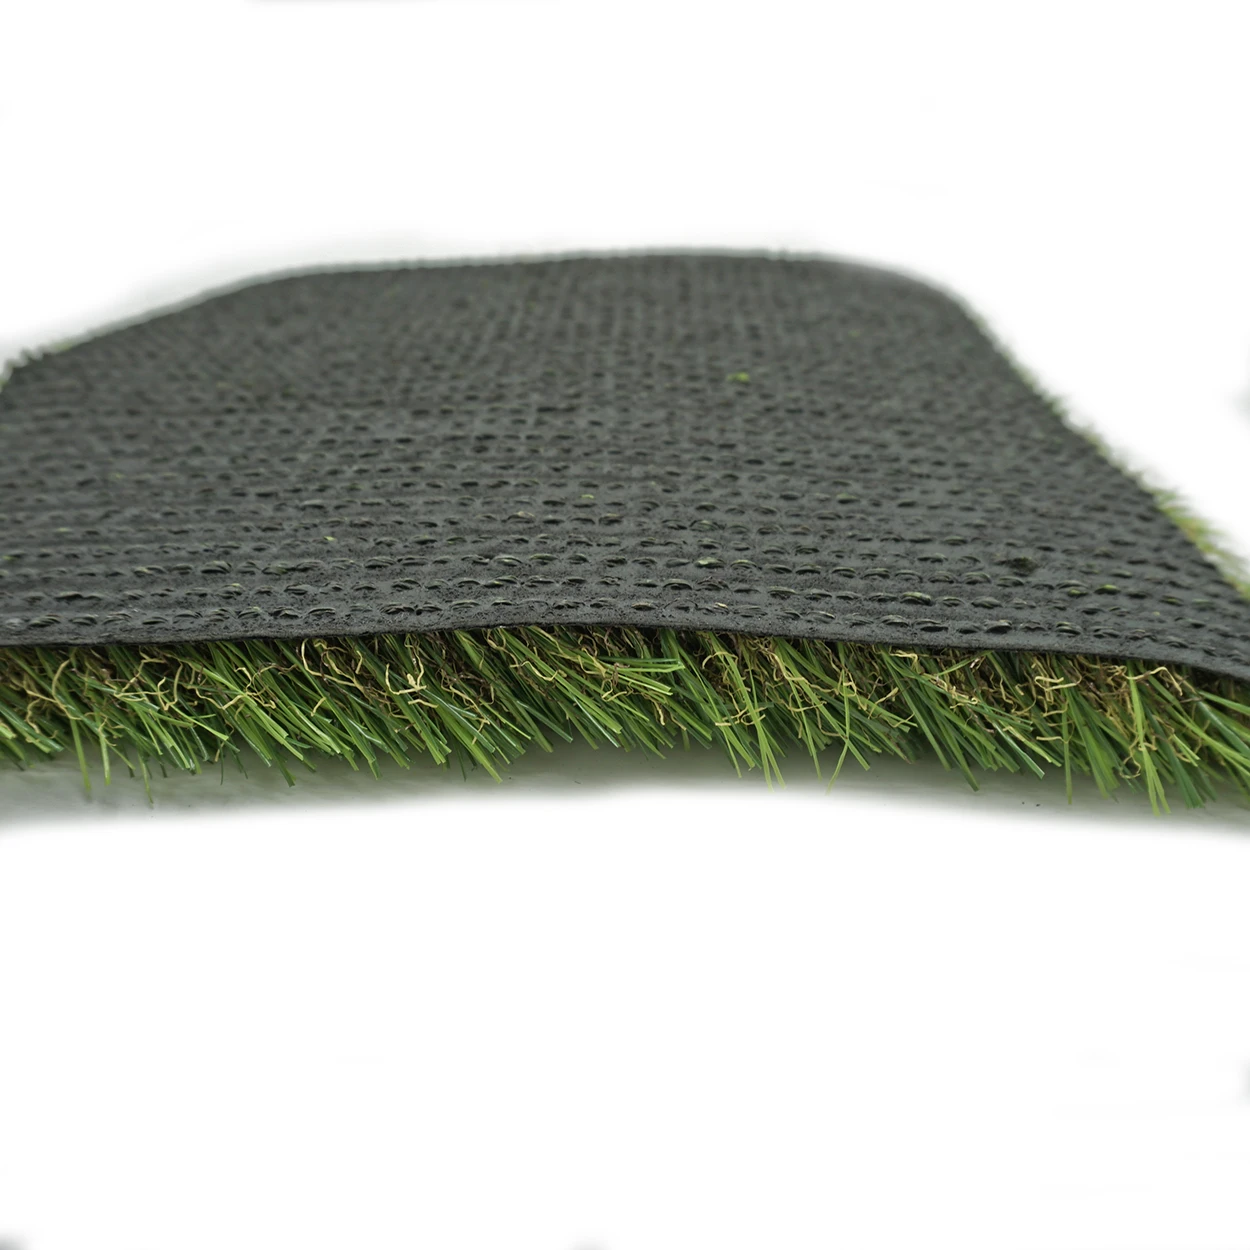 Artificial Grass Artificial Carpet Grass Soccer Synthetic Turf Landscaping PP+MESH+SBR